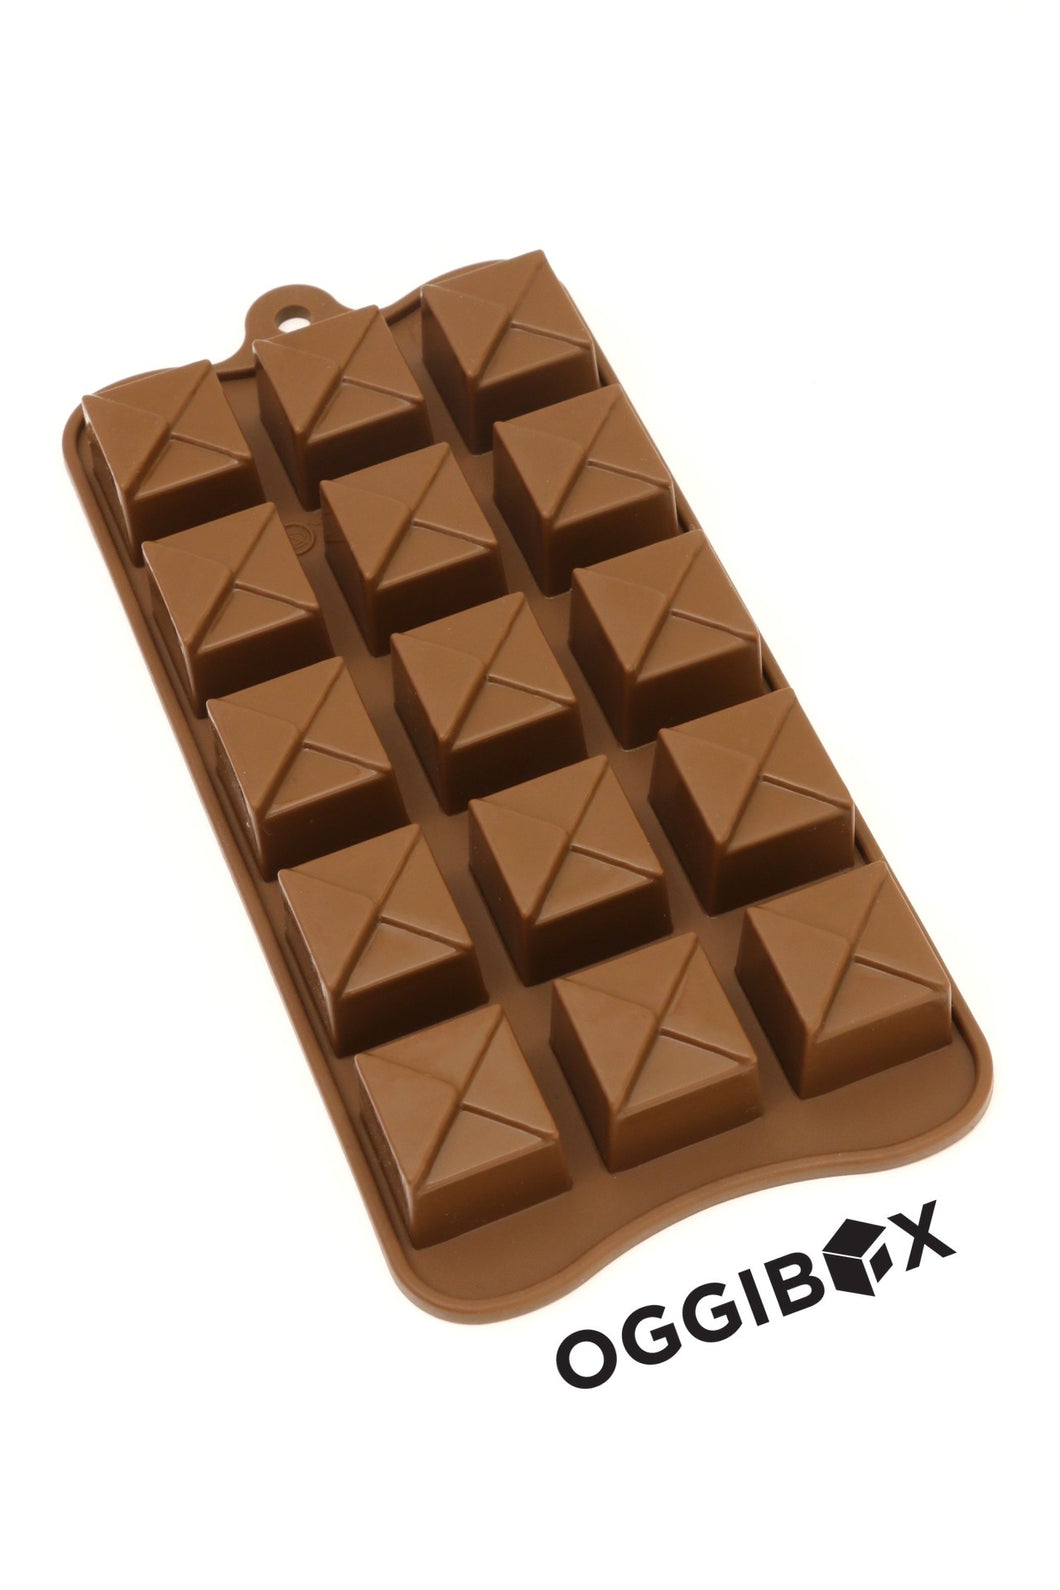 Oggibox  Food Grade Non Stick Premium Silicone 15-Cavity Tiered Square Chocolate, Candy and Gummy Mold